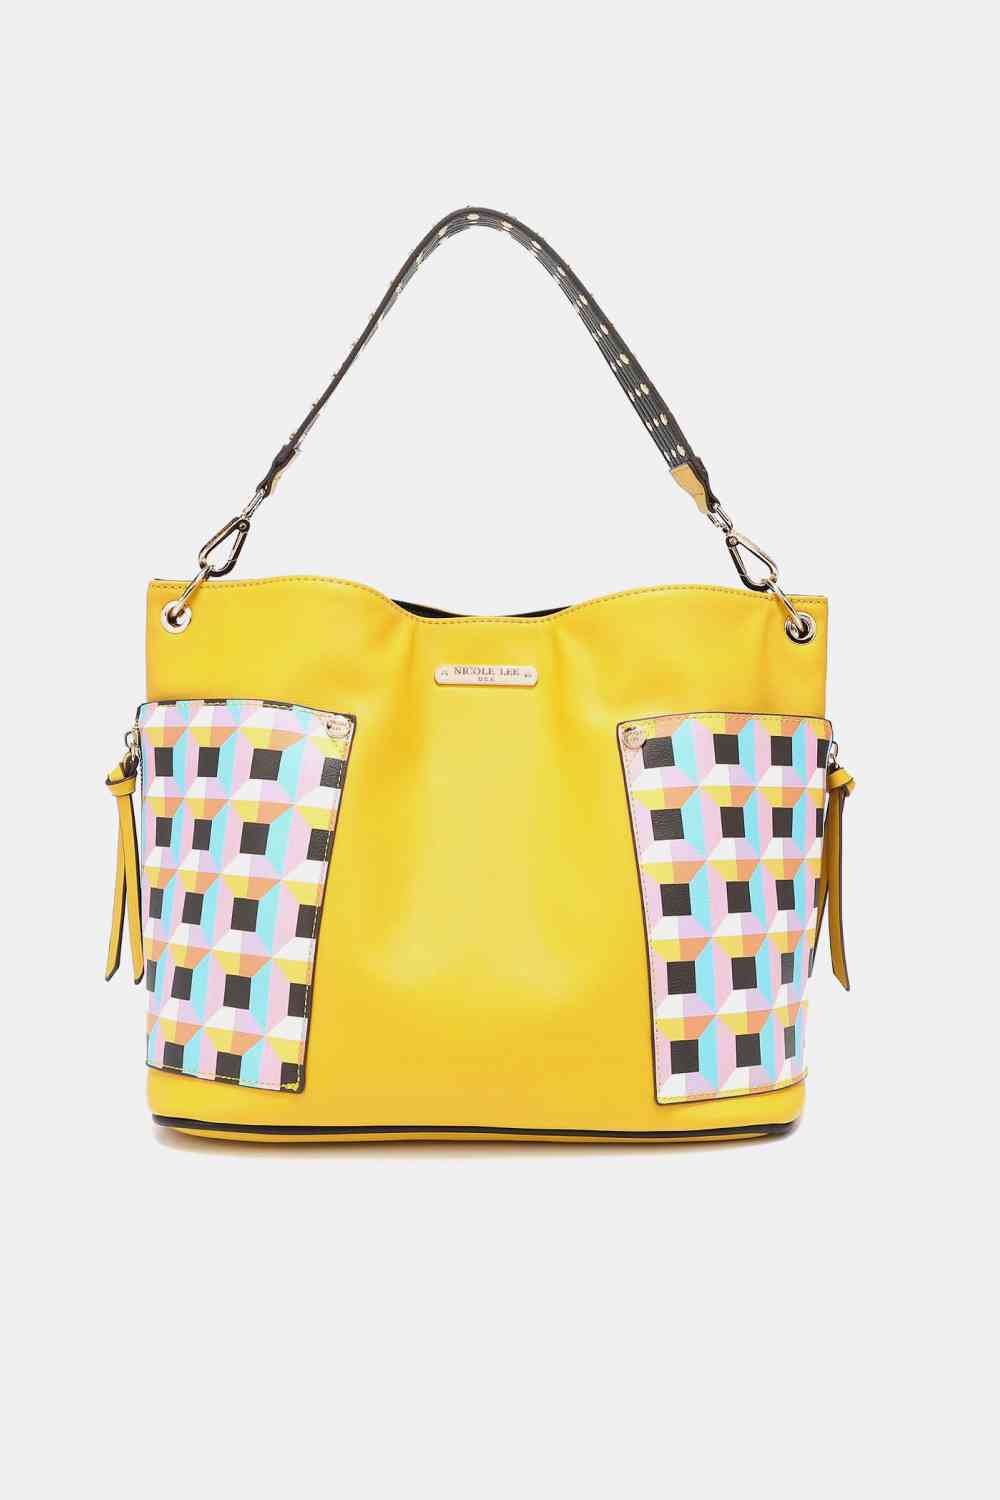 Nicole Lee USA Quihn 3-Piece Handbag Set Yellow No 4